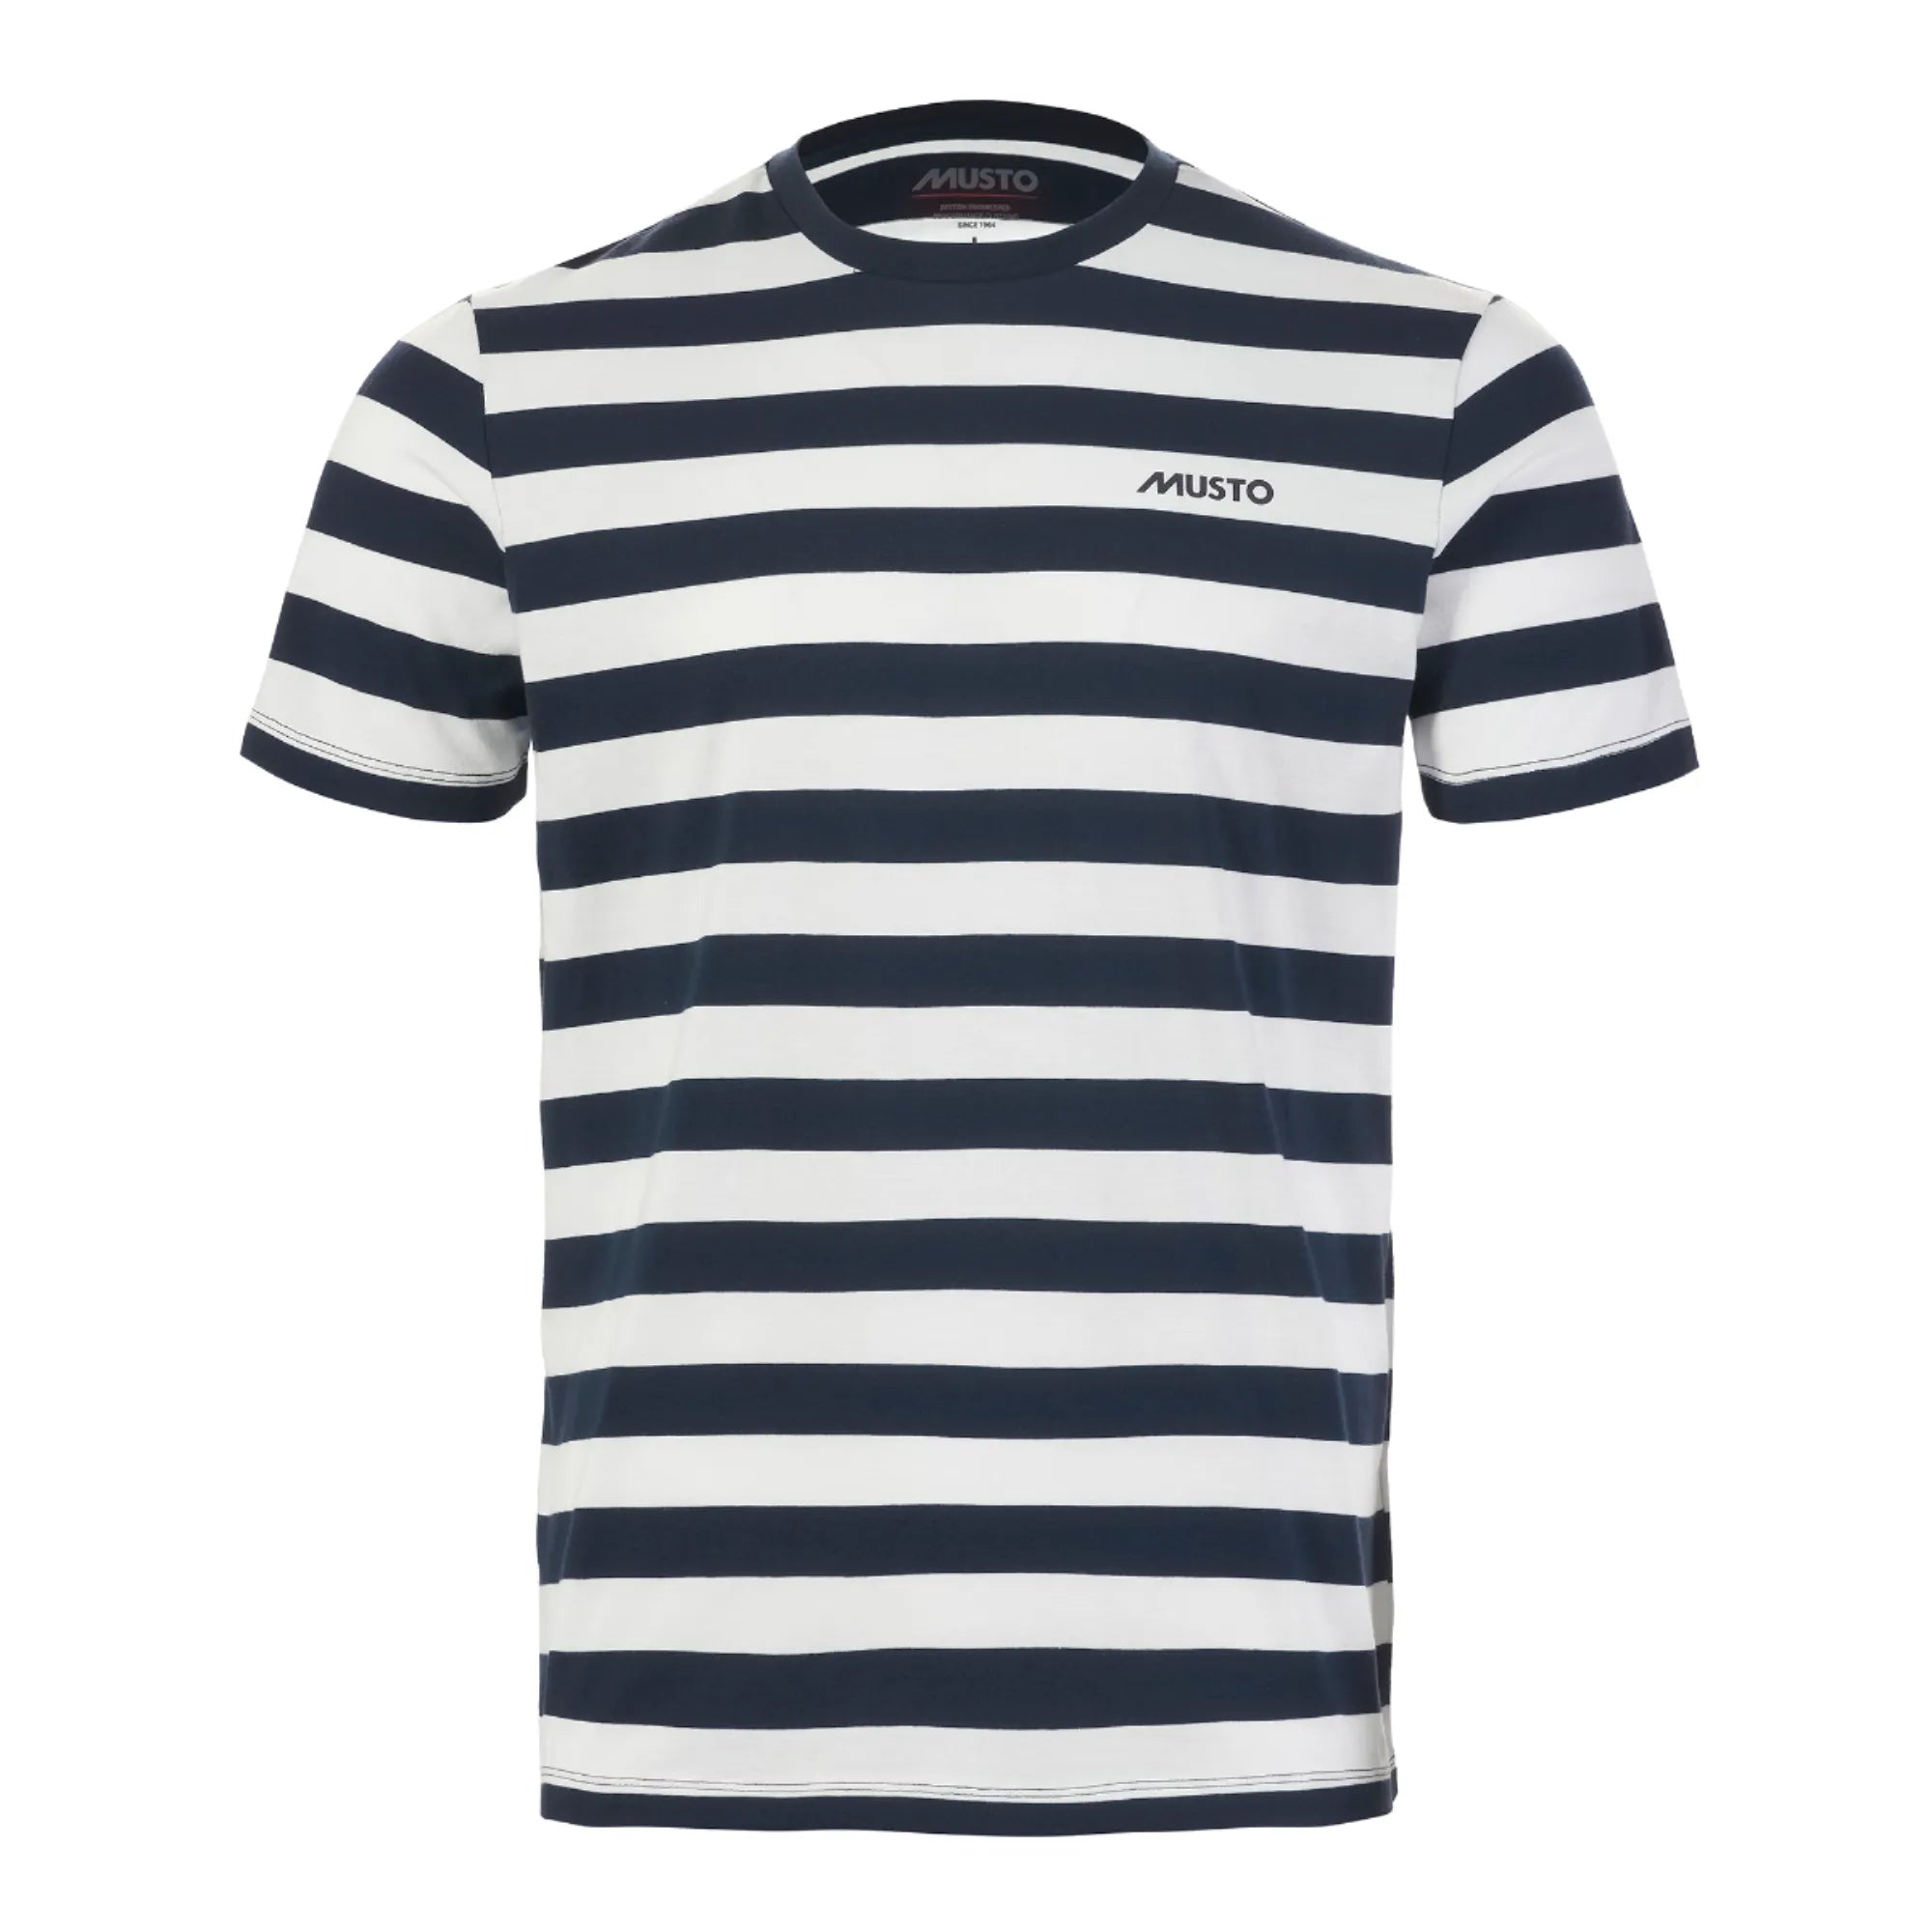 Men's Classic Striped Short Sleeve T-Shirt - Navy/White